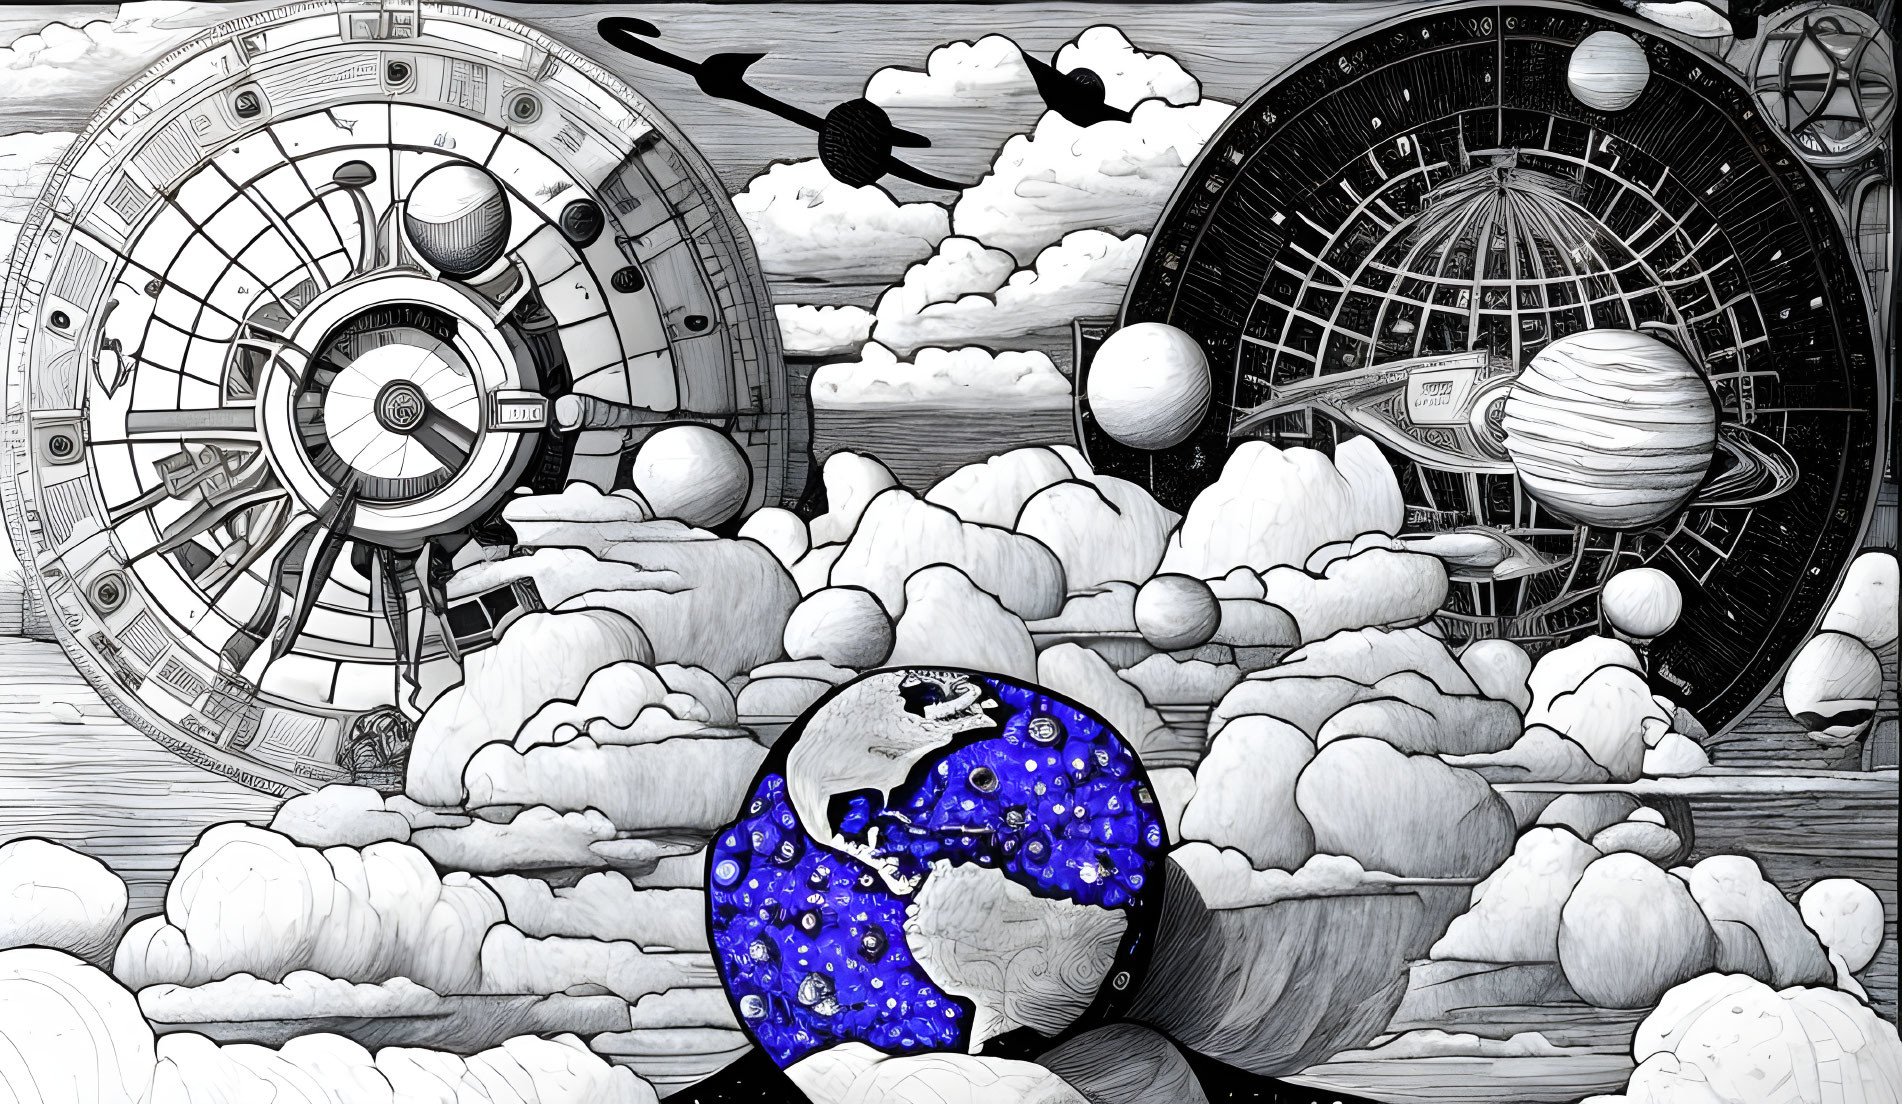 Monochrome celestial illustration with steampunk space theme